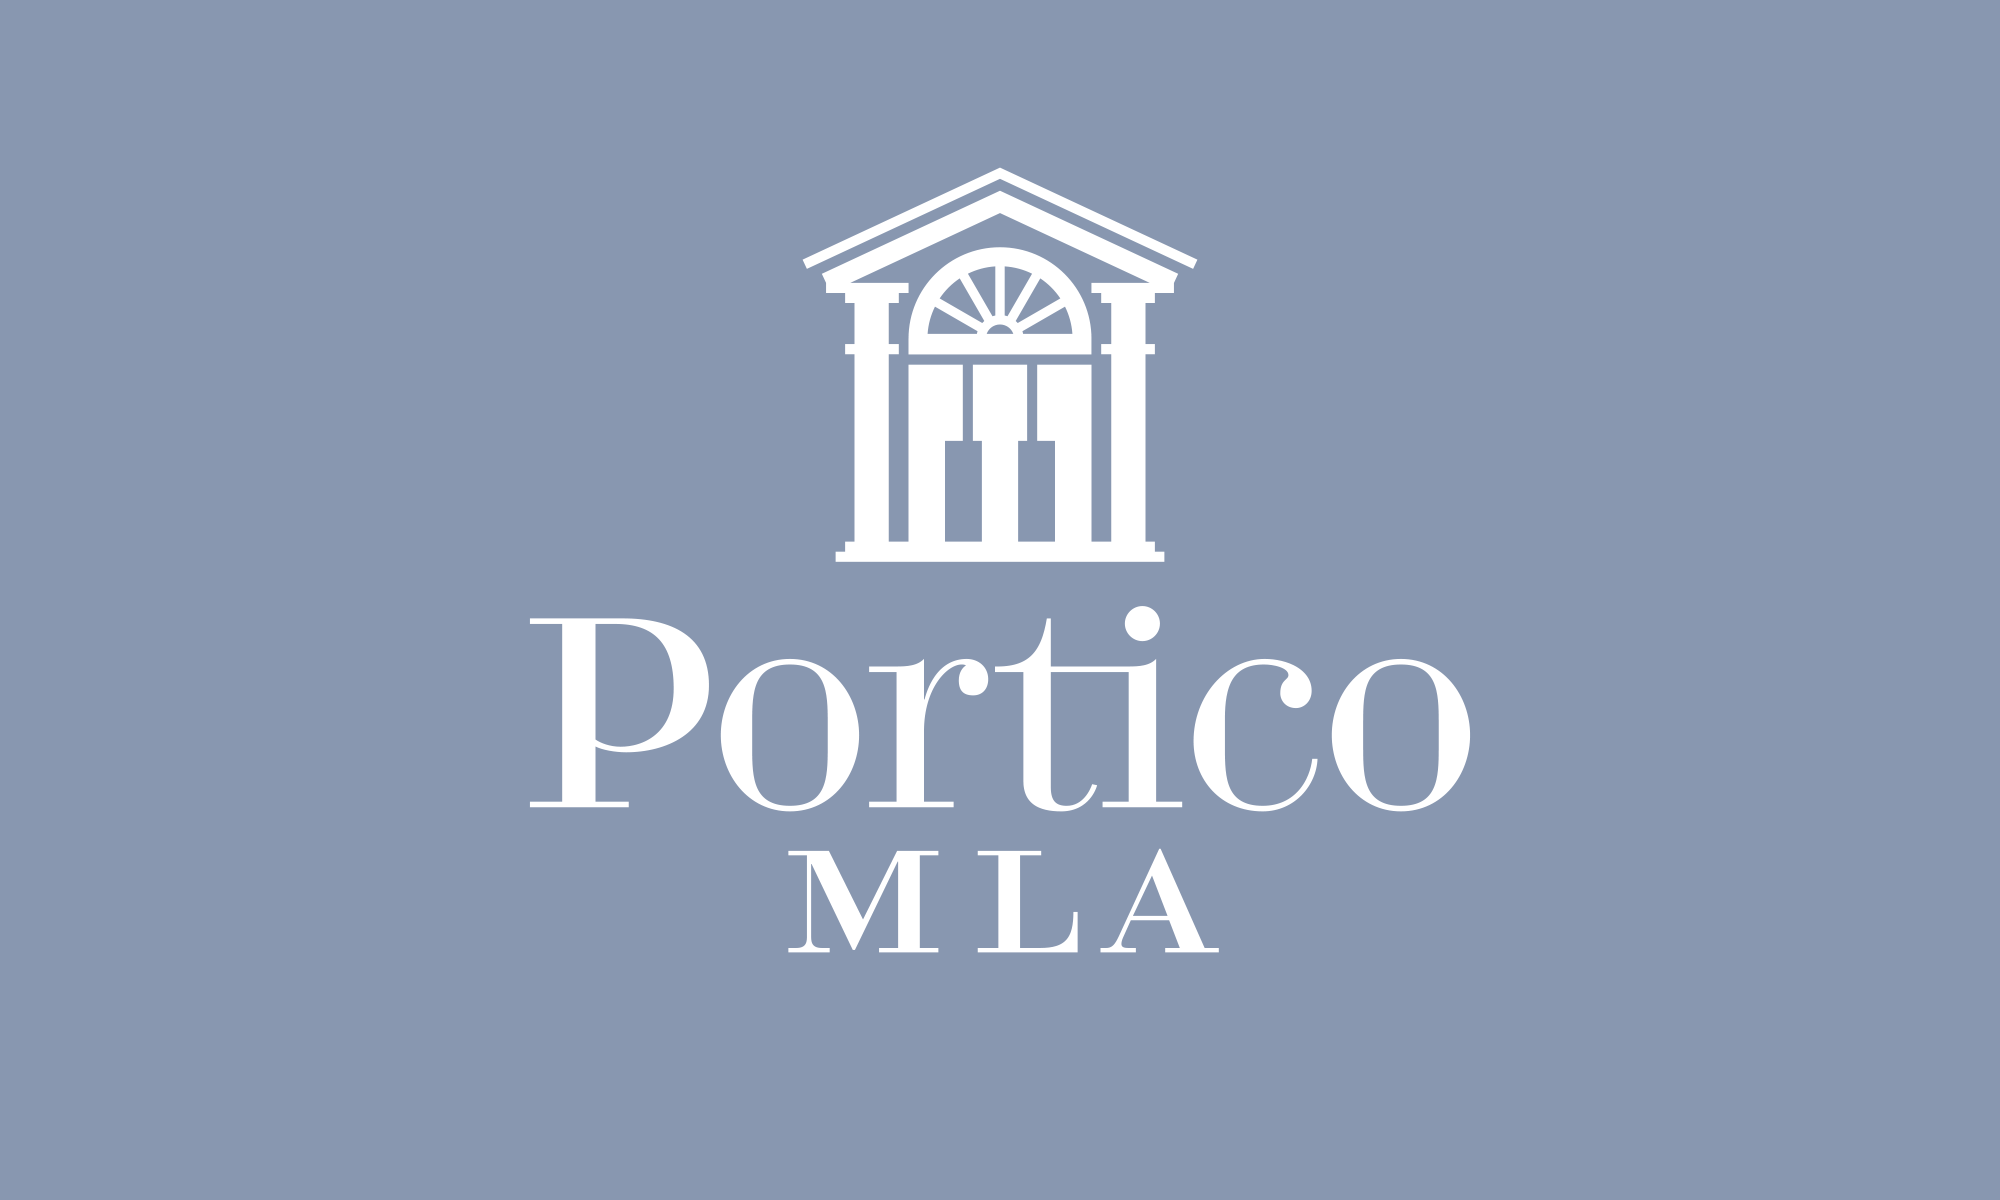 Portico-logo-plate-V.png